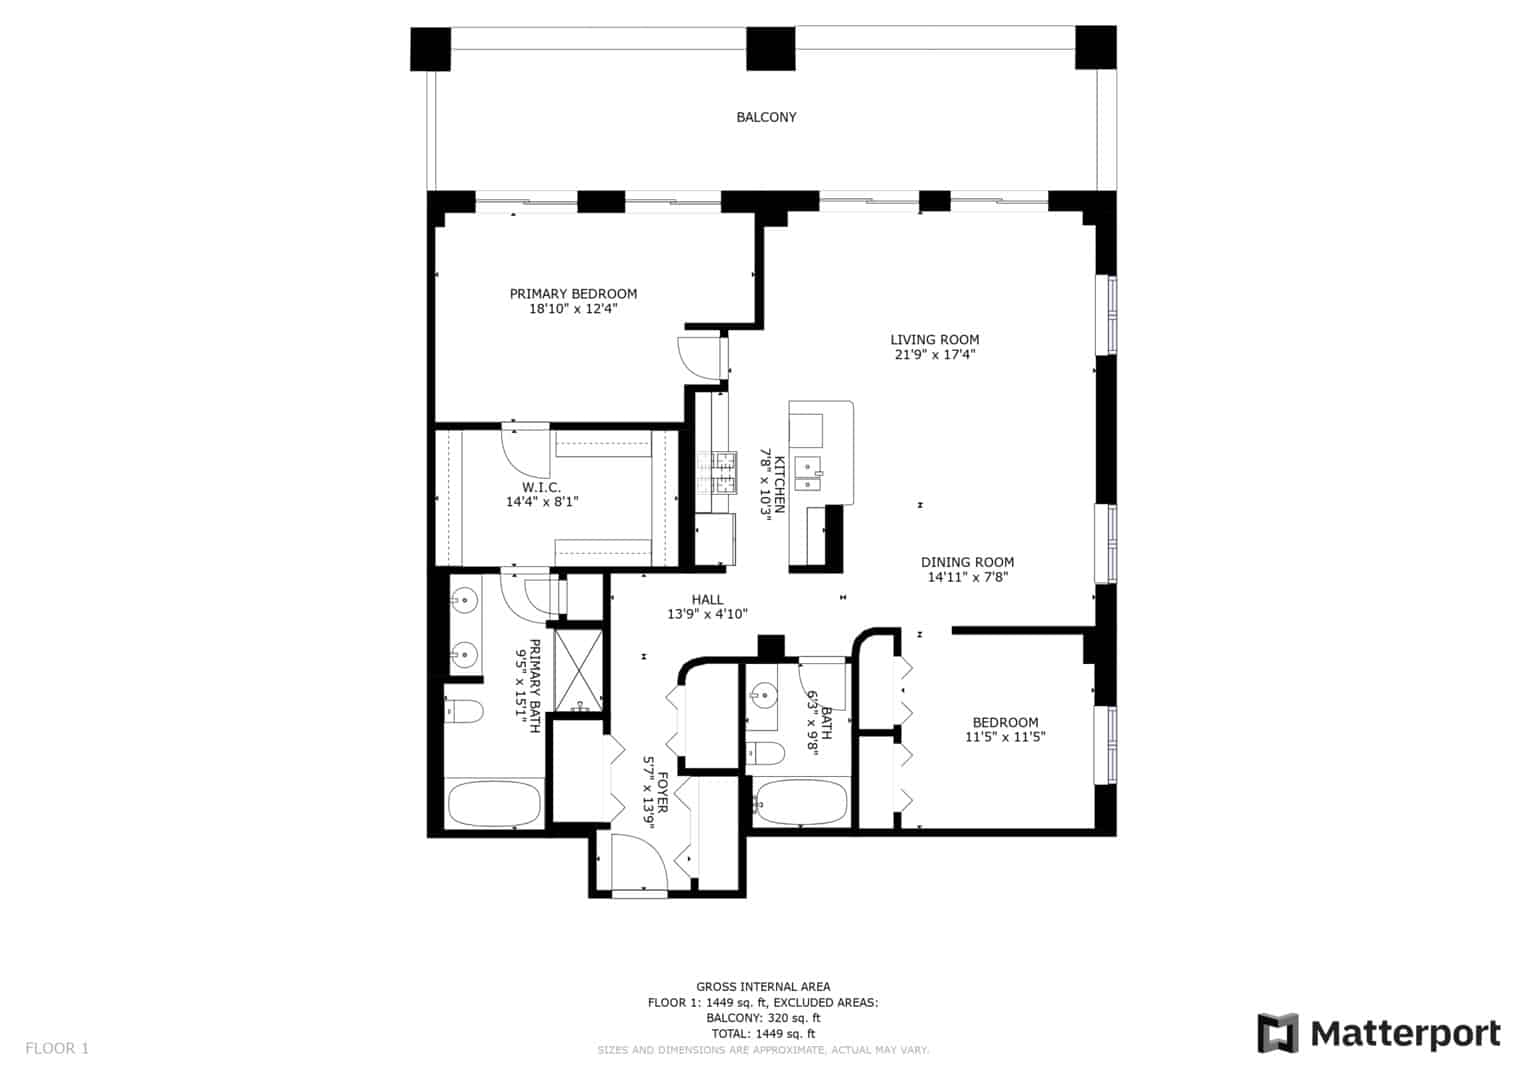 Floor plan at 1301 W Madison unit 308, Chicago IL 60607